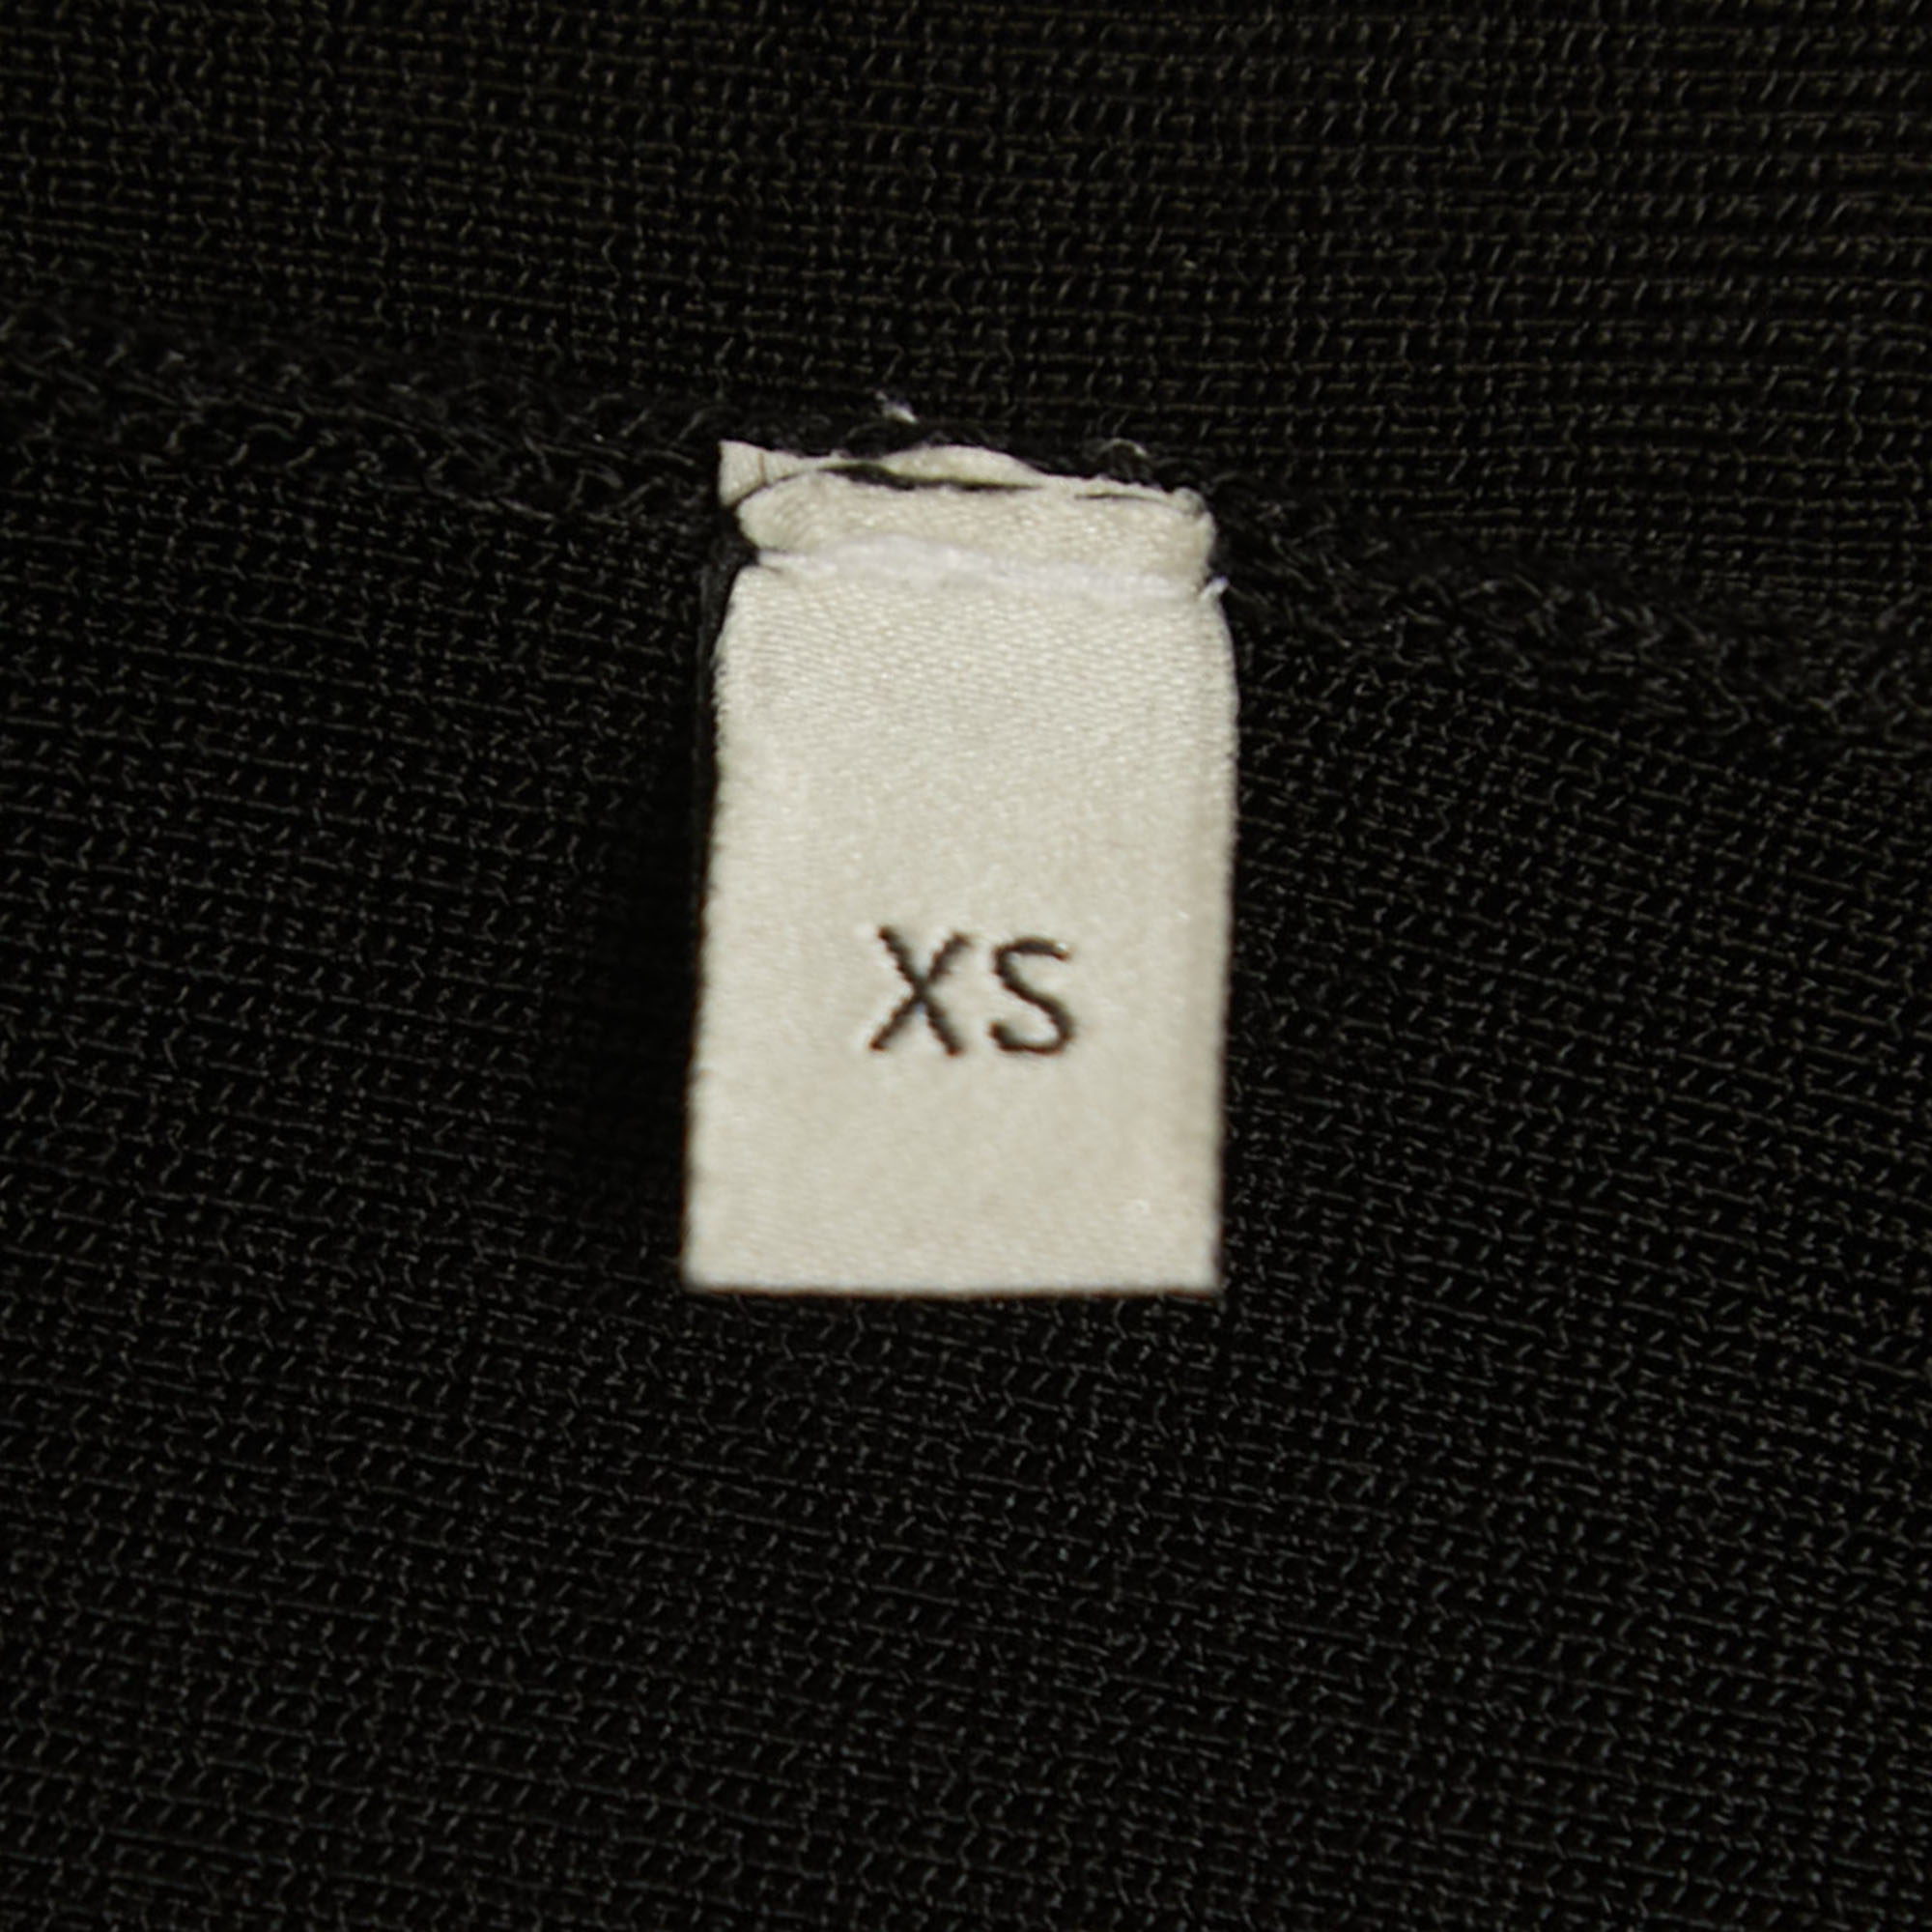 Gucci Black Jersey Logo Detailed Neck Short Sleeve T-Shirt XS